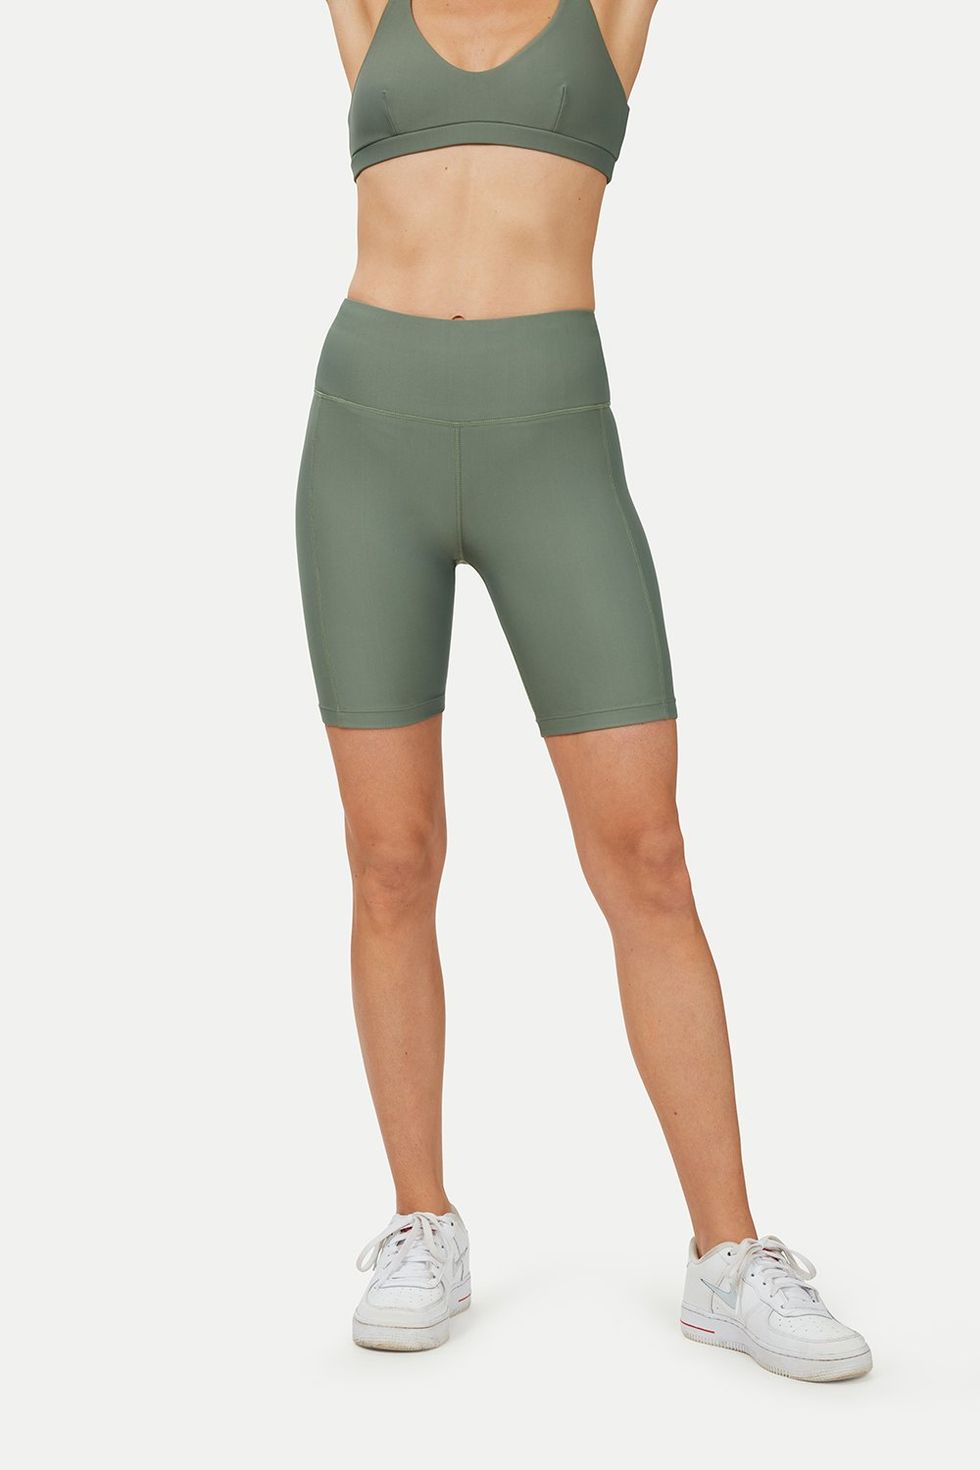 Yoga Shorts, Booty, Pockets, Hot Yoga & More